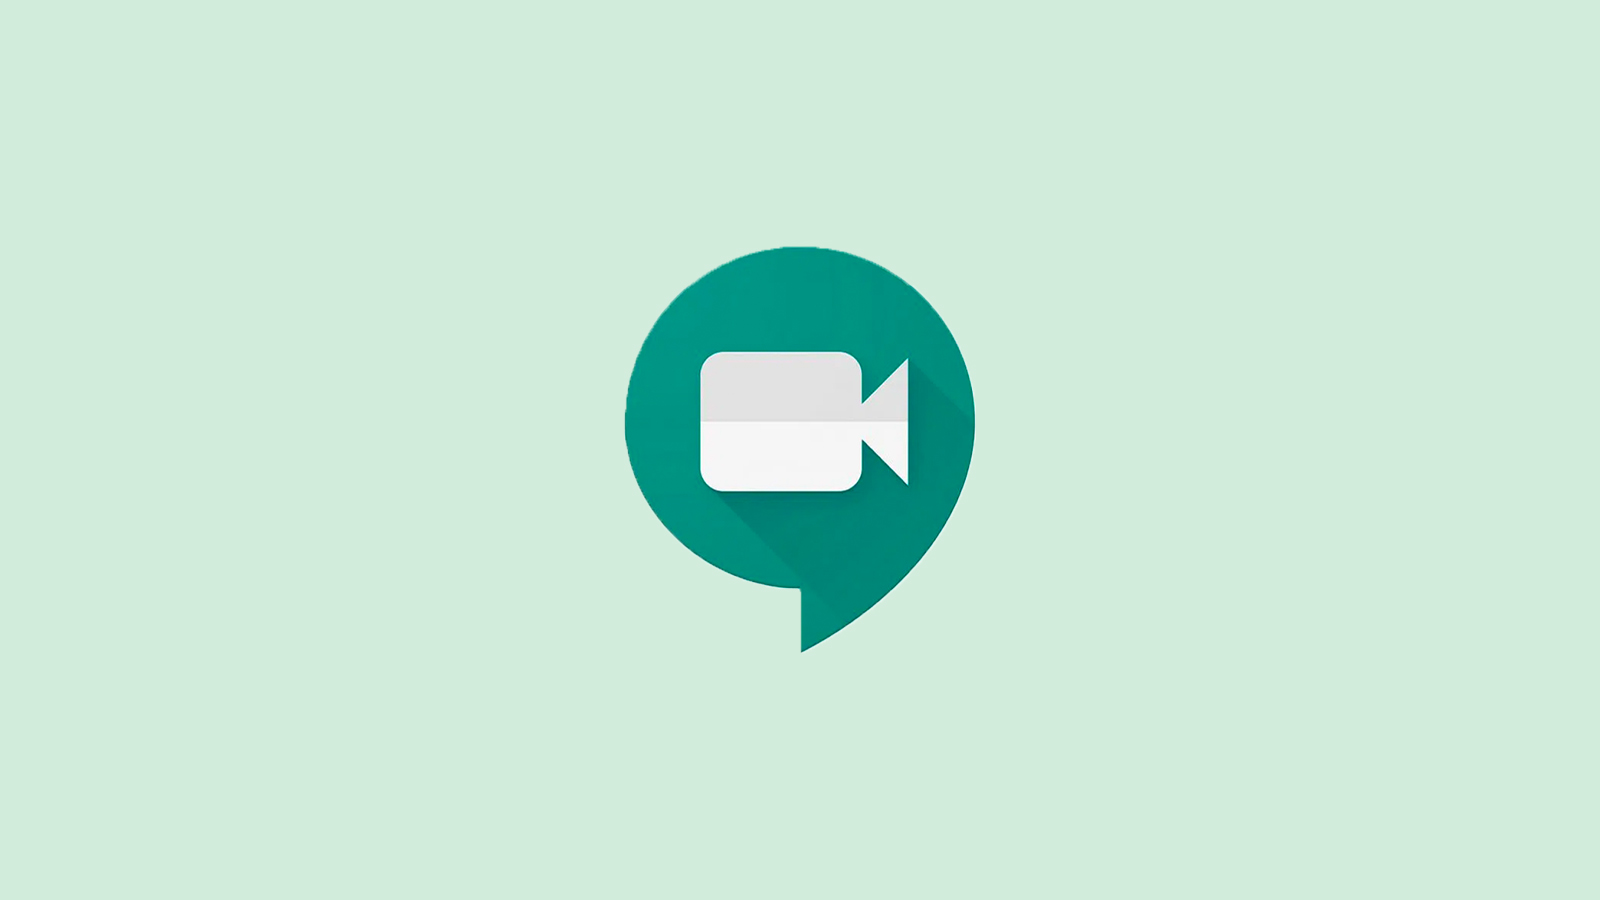 Google Meet makes tracking conversations a lot easier